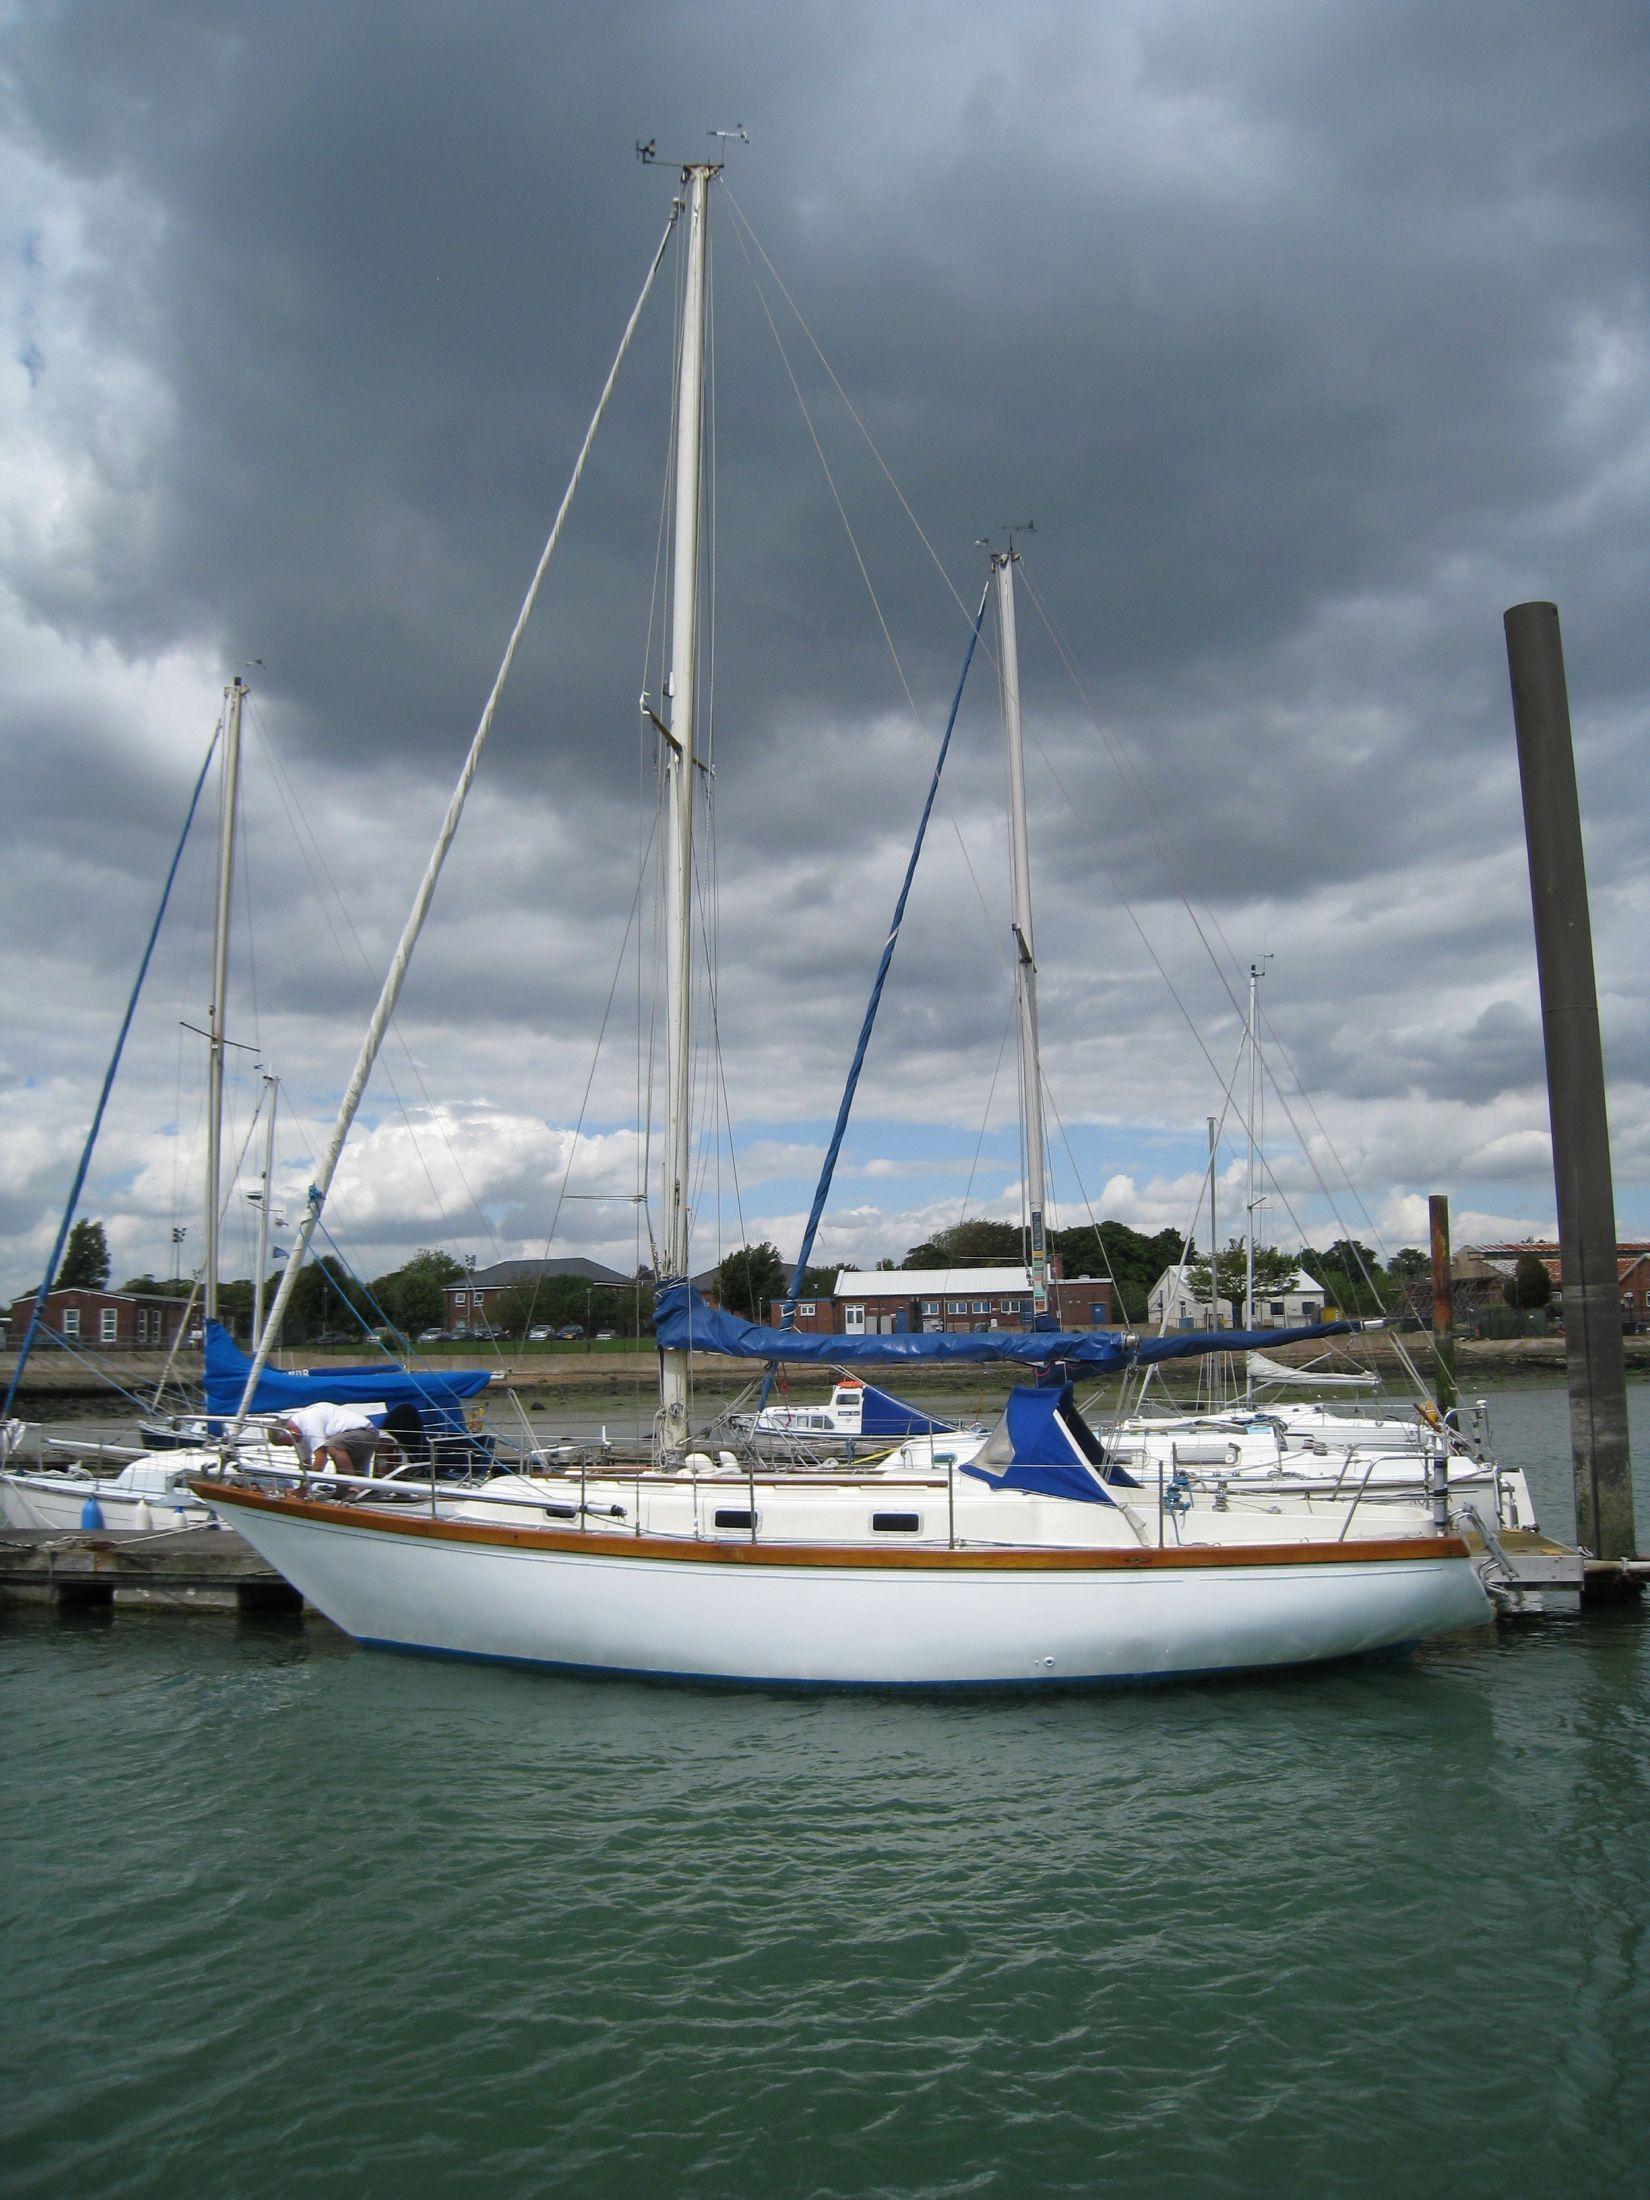 Roberts 34, Deacons Boatyard, Hampshire